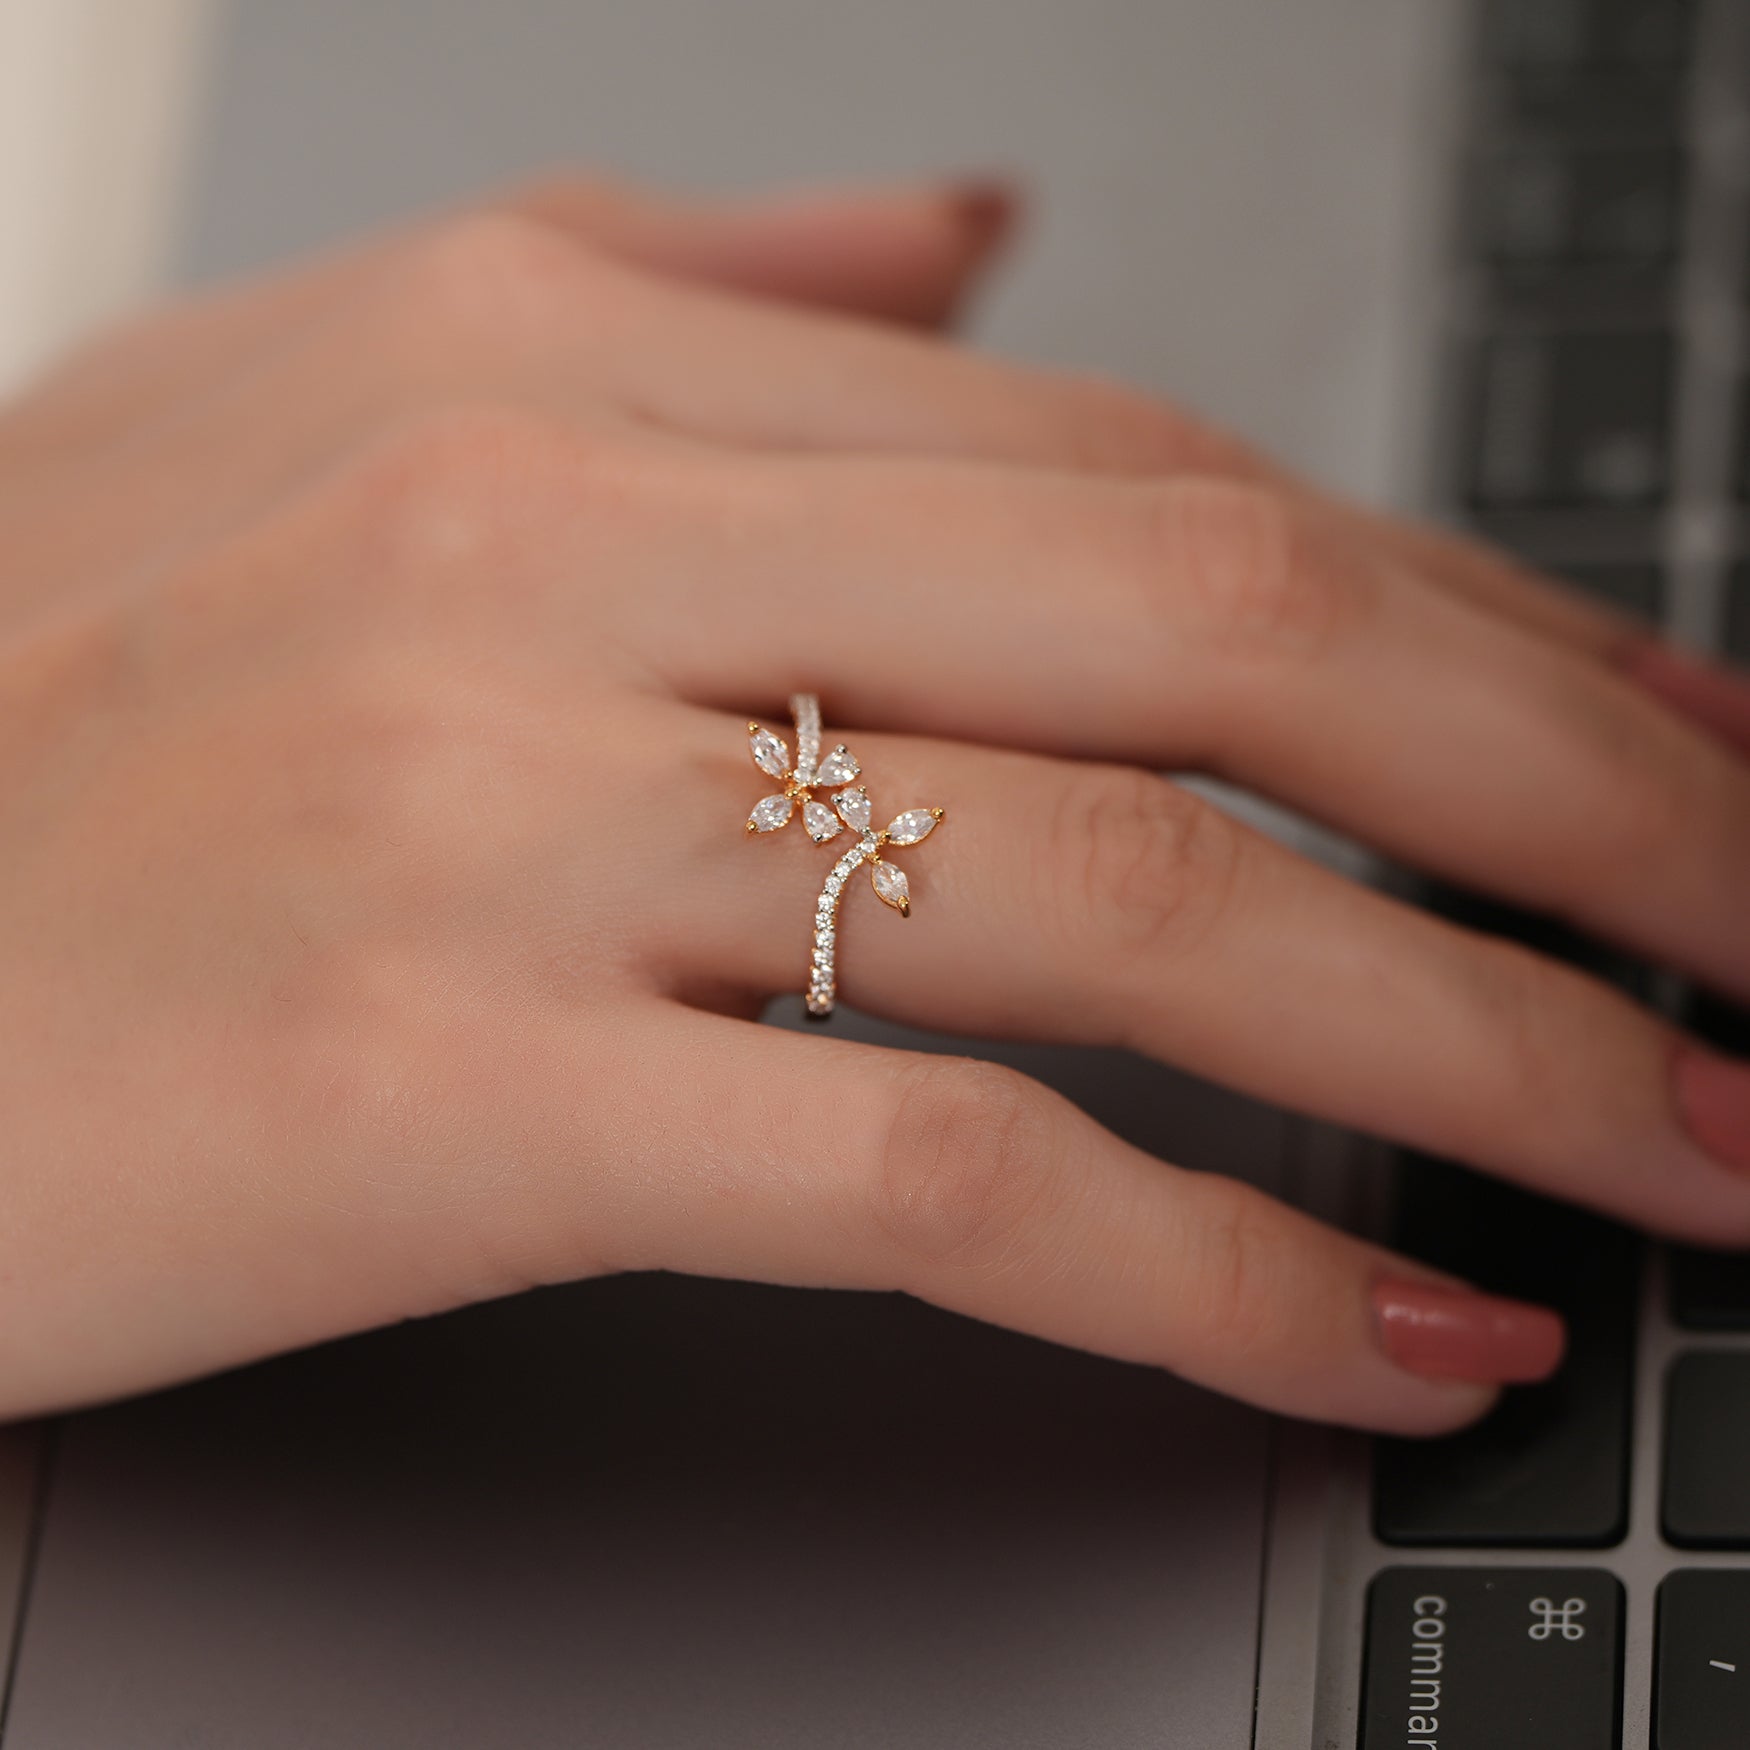 Delicate floral diamond adjustable finger ring